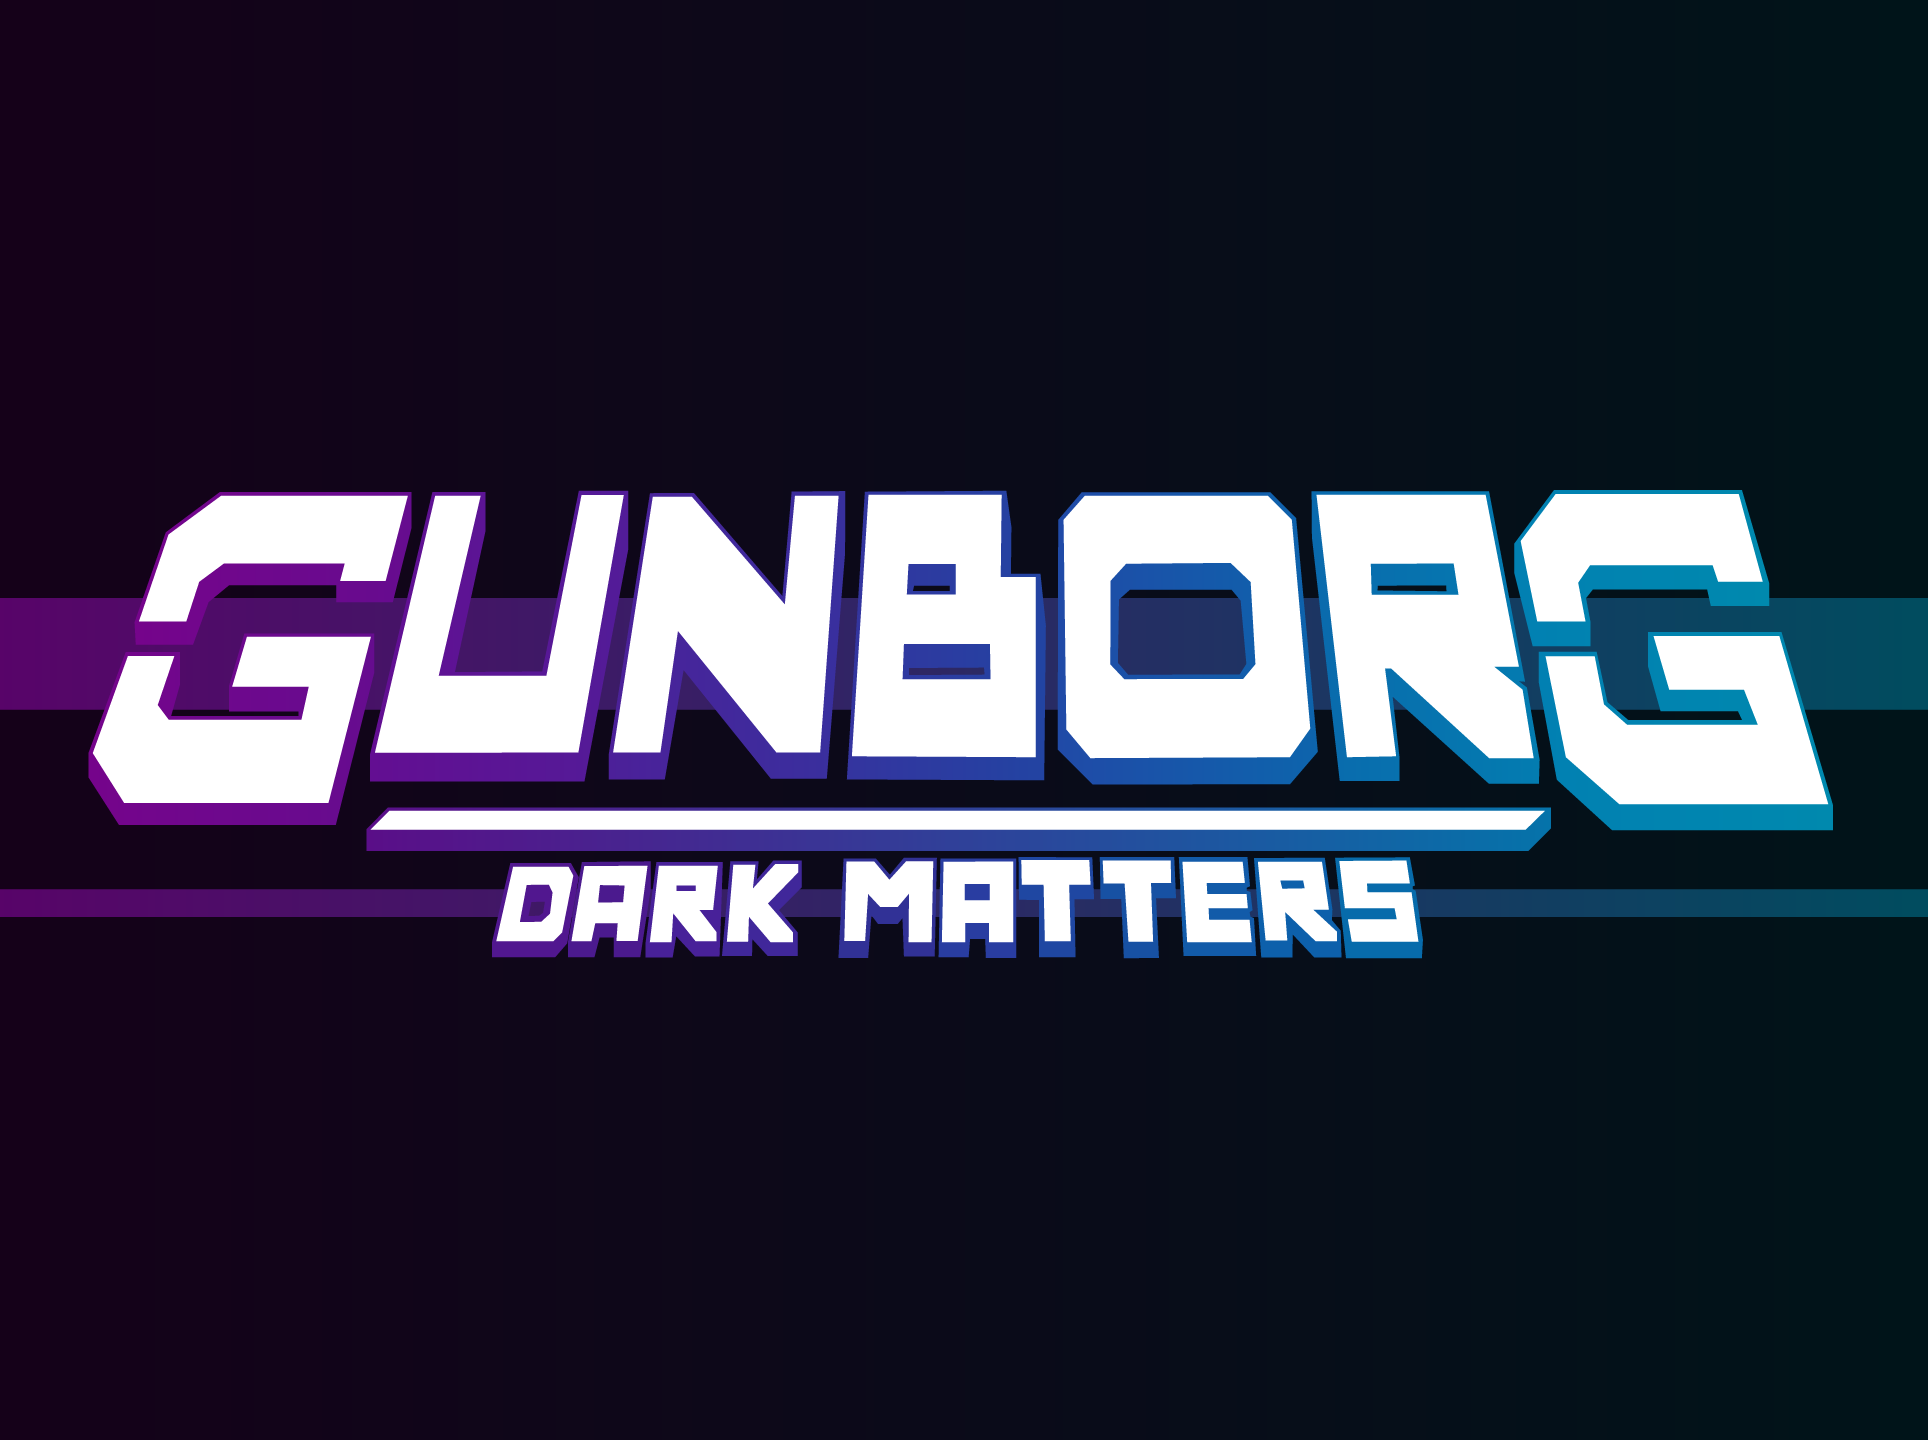 General 1928x1440 video games game logo Gunborg technology dark fighting Fighting Games cyberpunk text white text black background